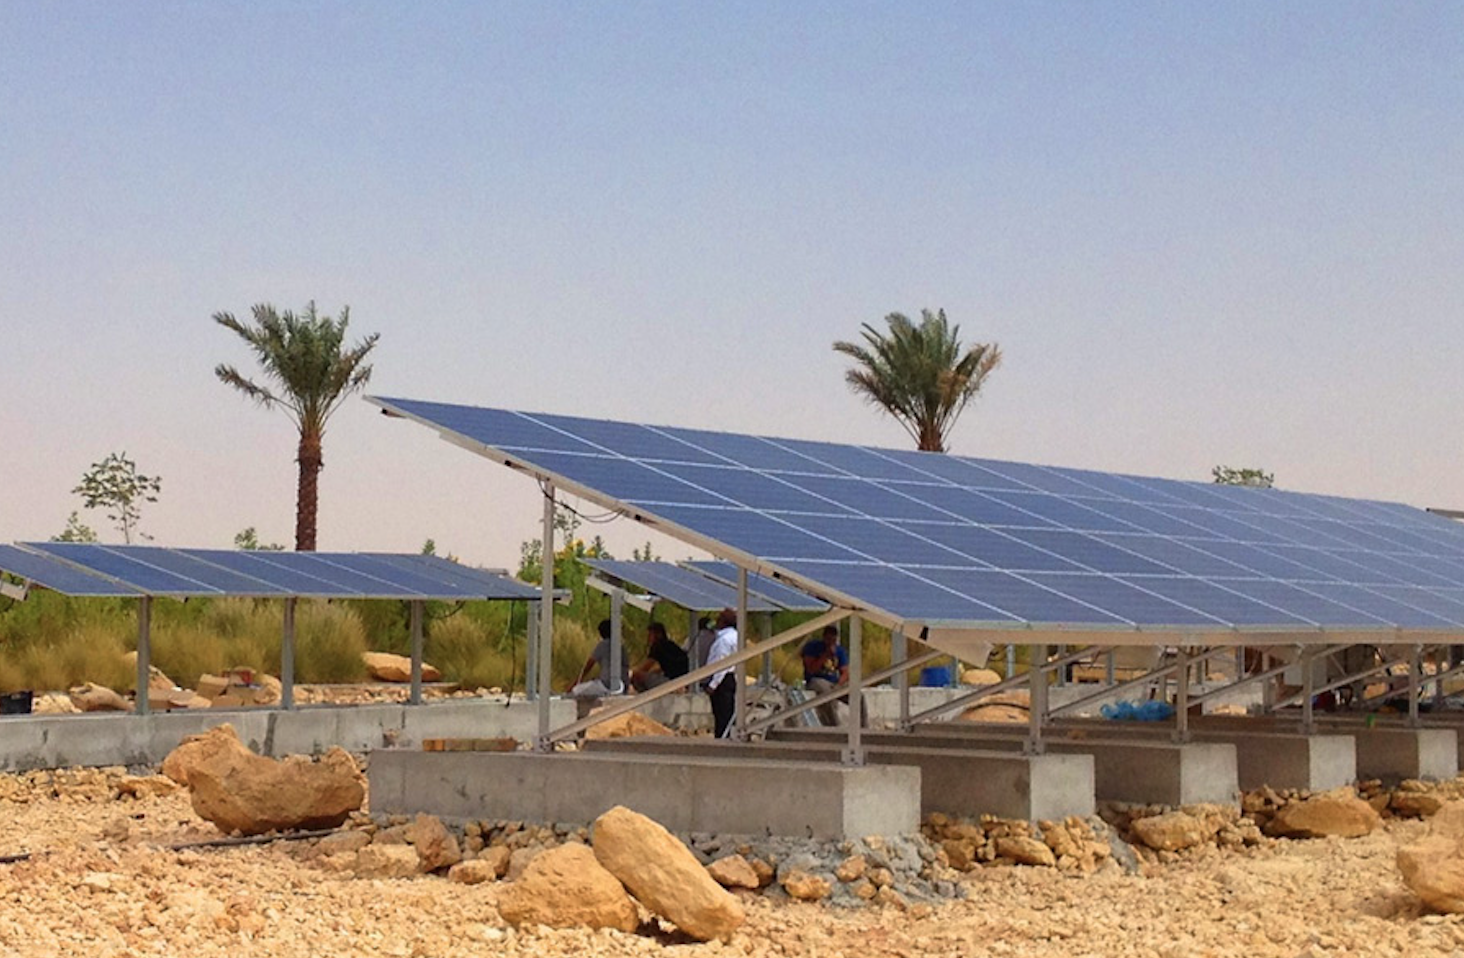 Solar Energy Takes Center Stage in Saudi Arabia Under King Salman